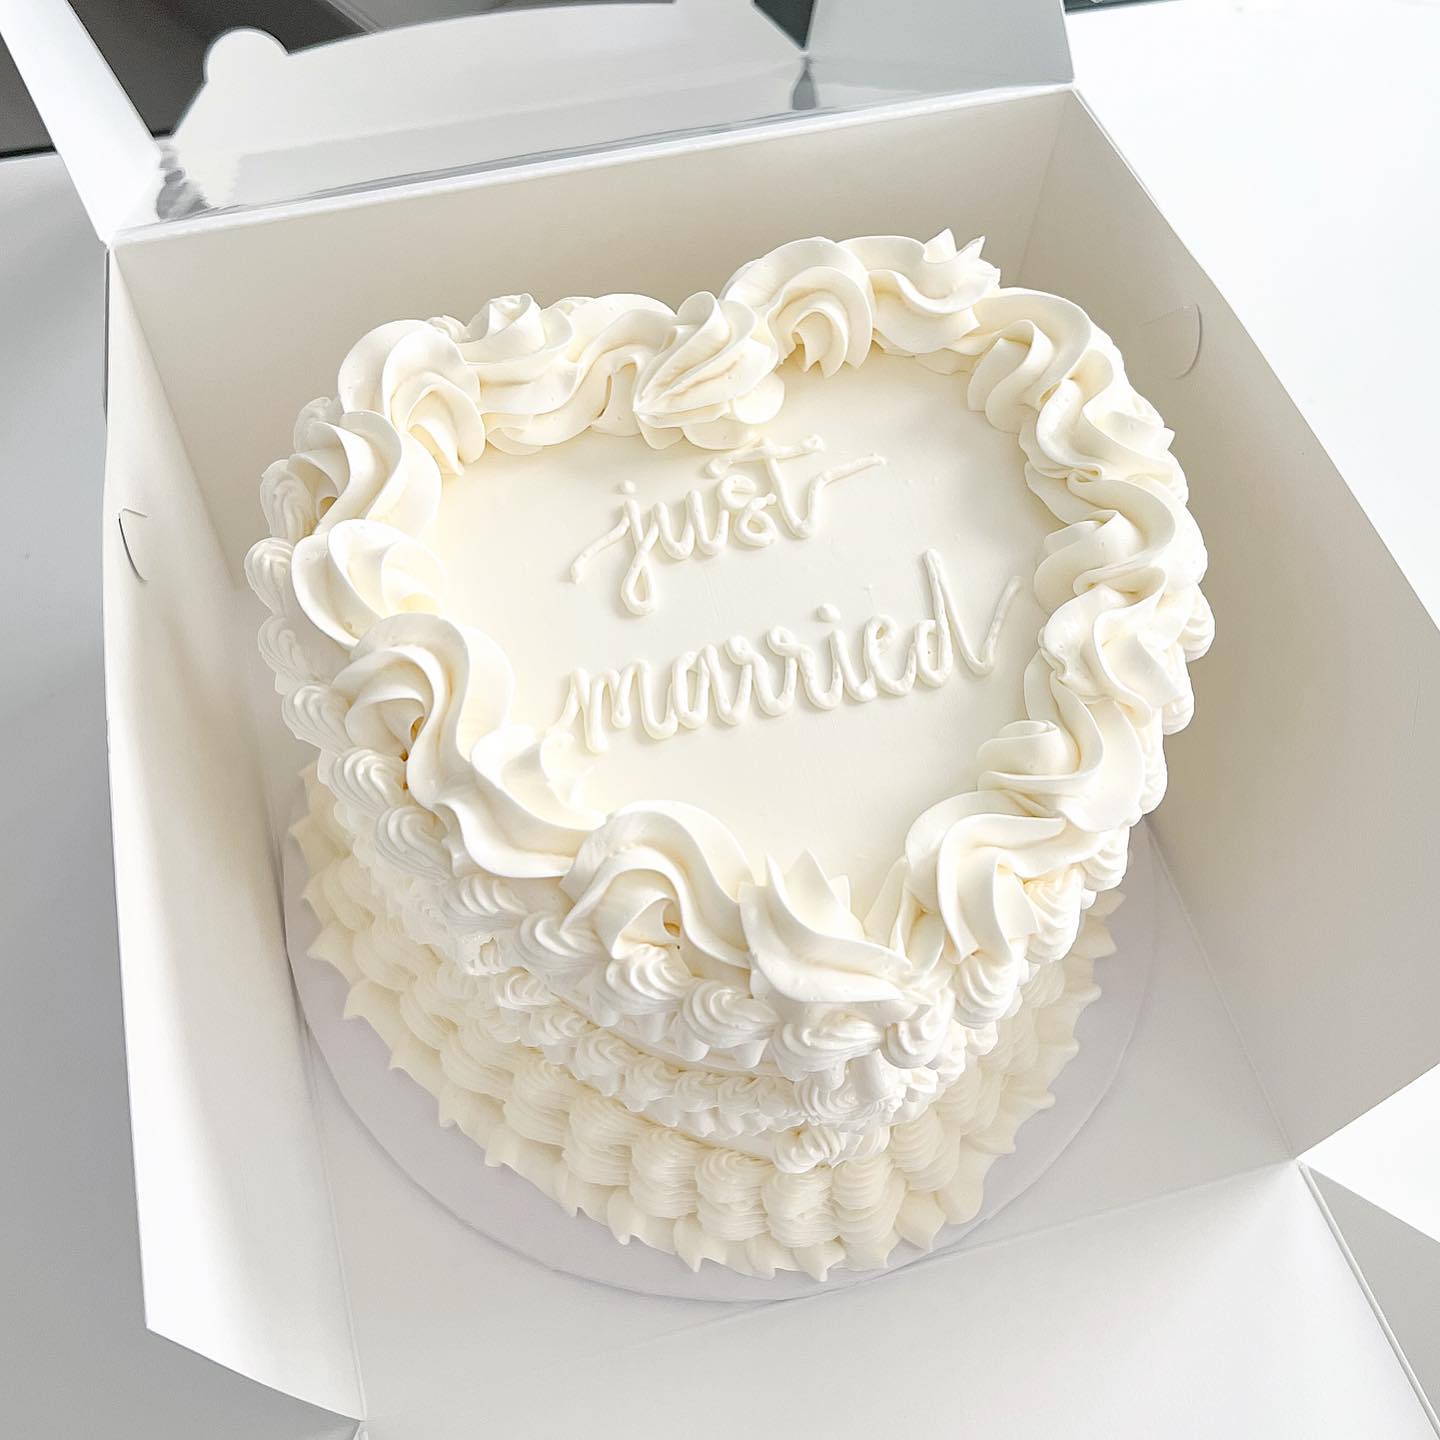 vintage white heart shaped groom cake via bakedbyjulie